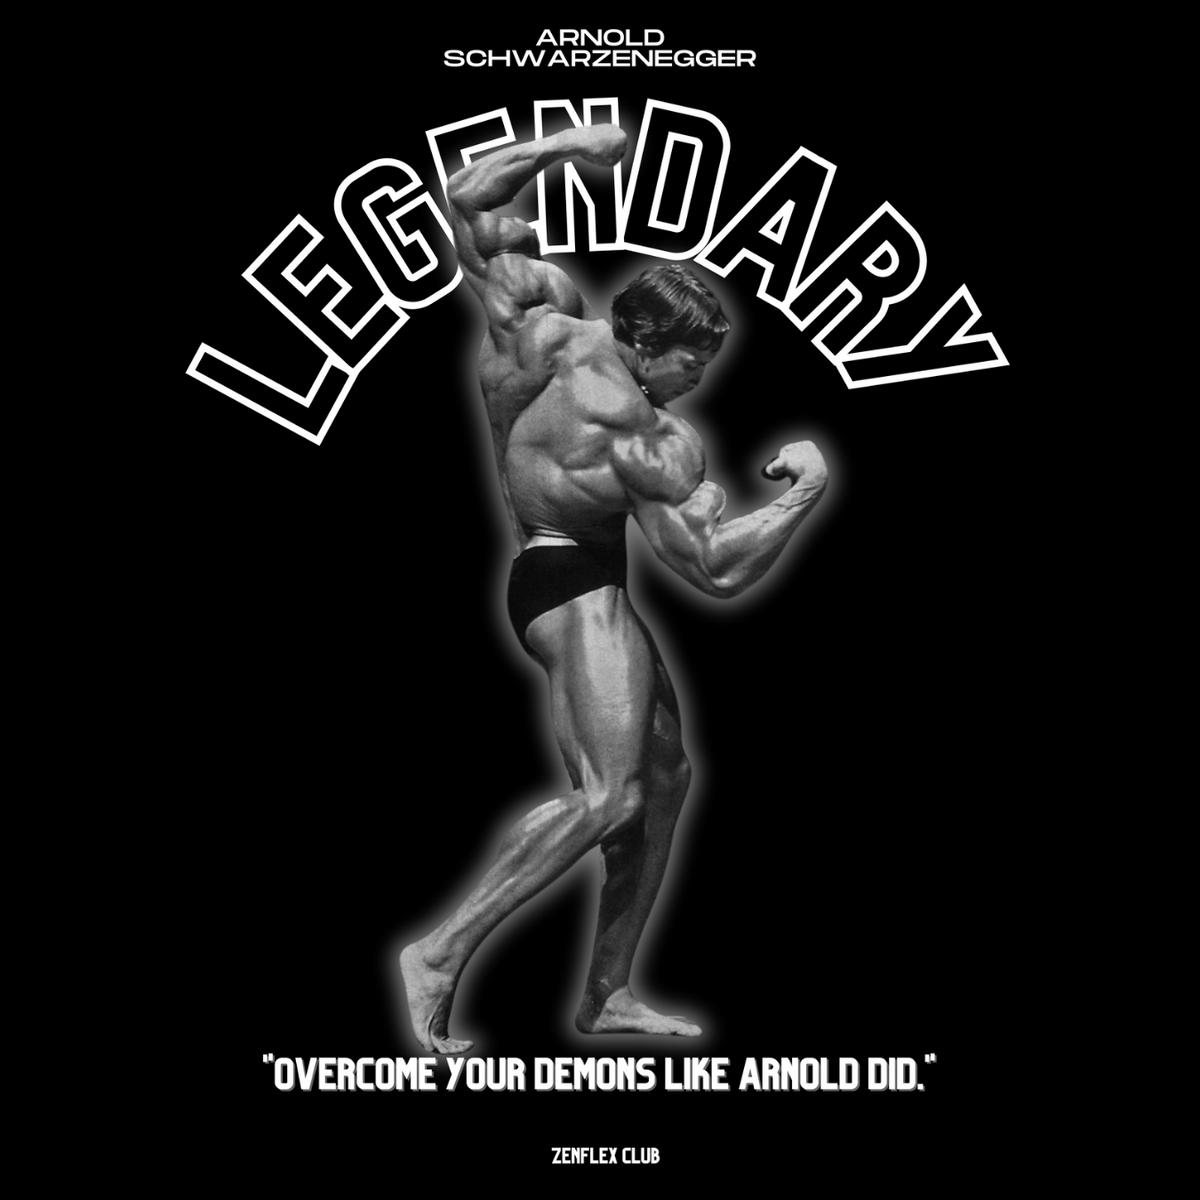 Nome do produto: Arnold Schwarzenegger Legendary